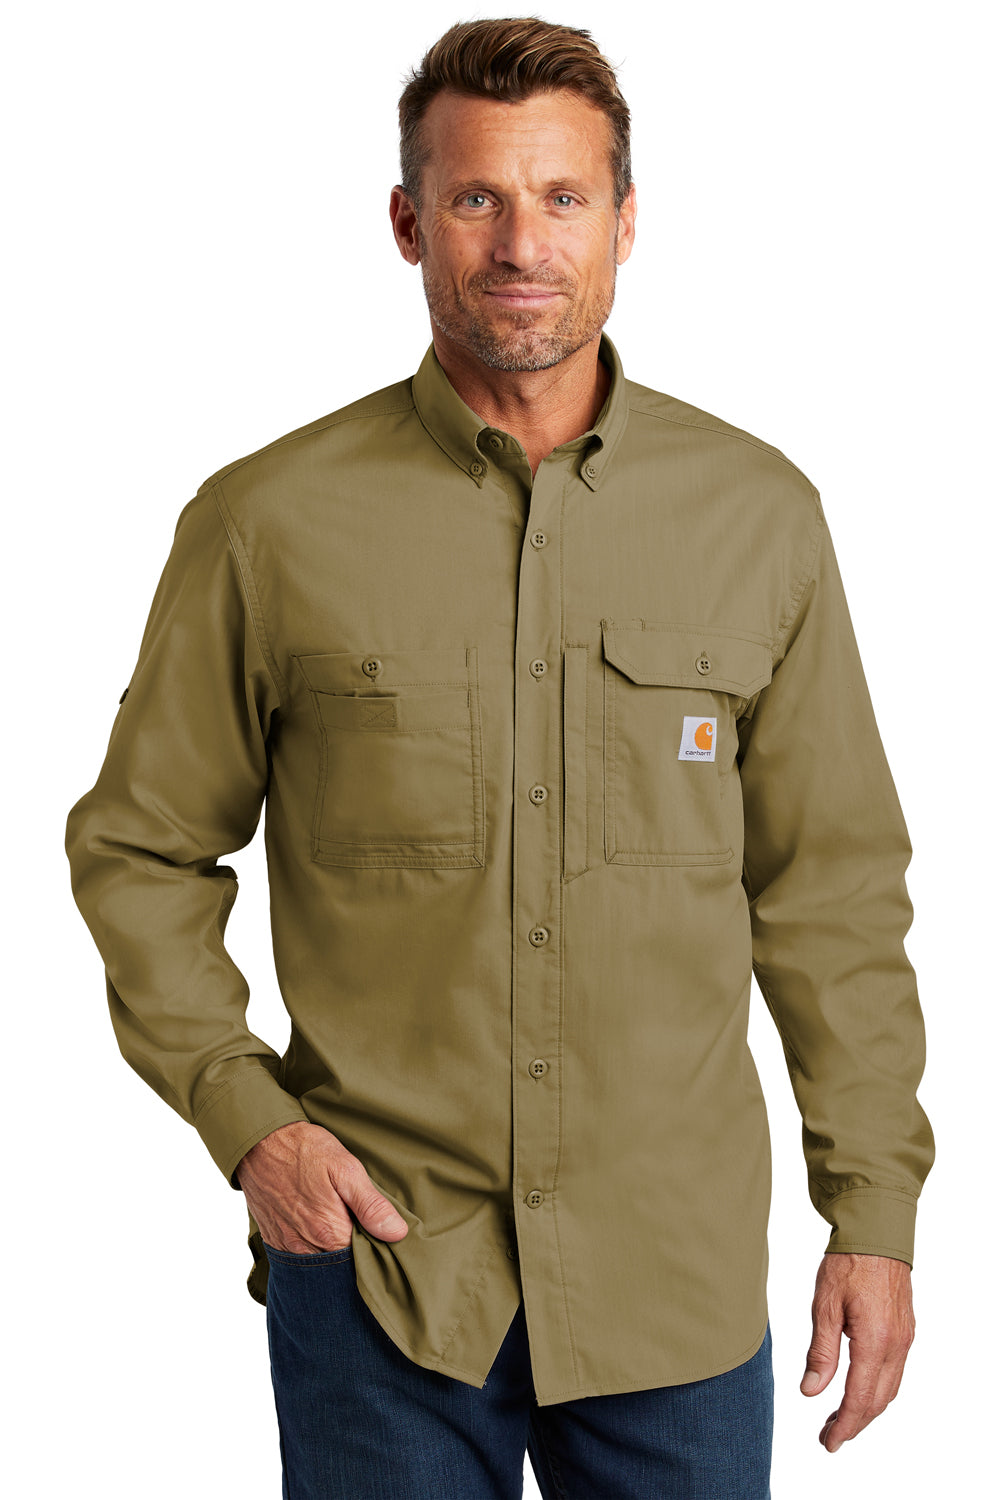 Carhartt CT102418 Mens Force Ridgefield Moisture Wicking Long Sleeve Button Down Shirt w/ Double Pockets Khaki Brown Front